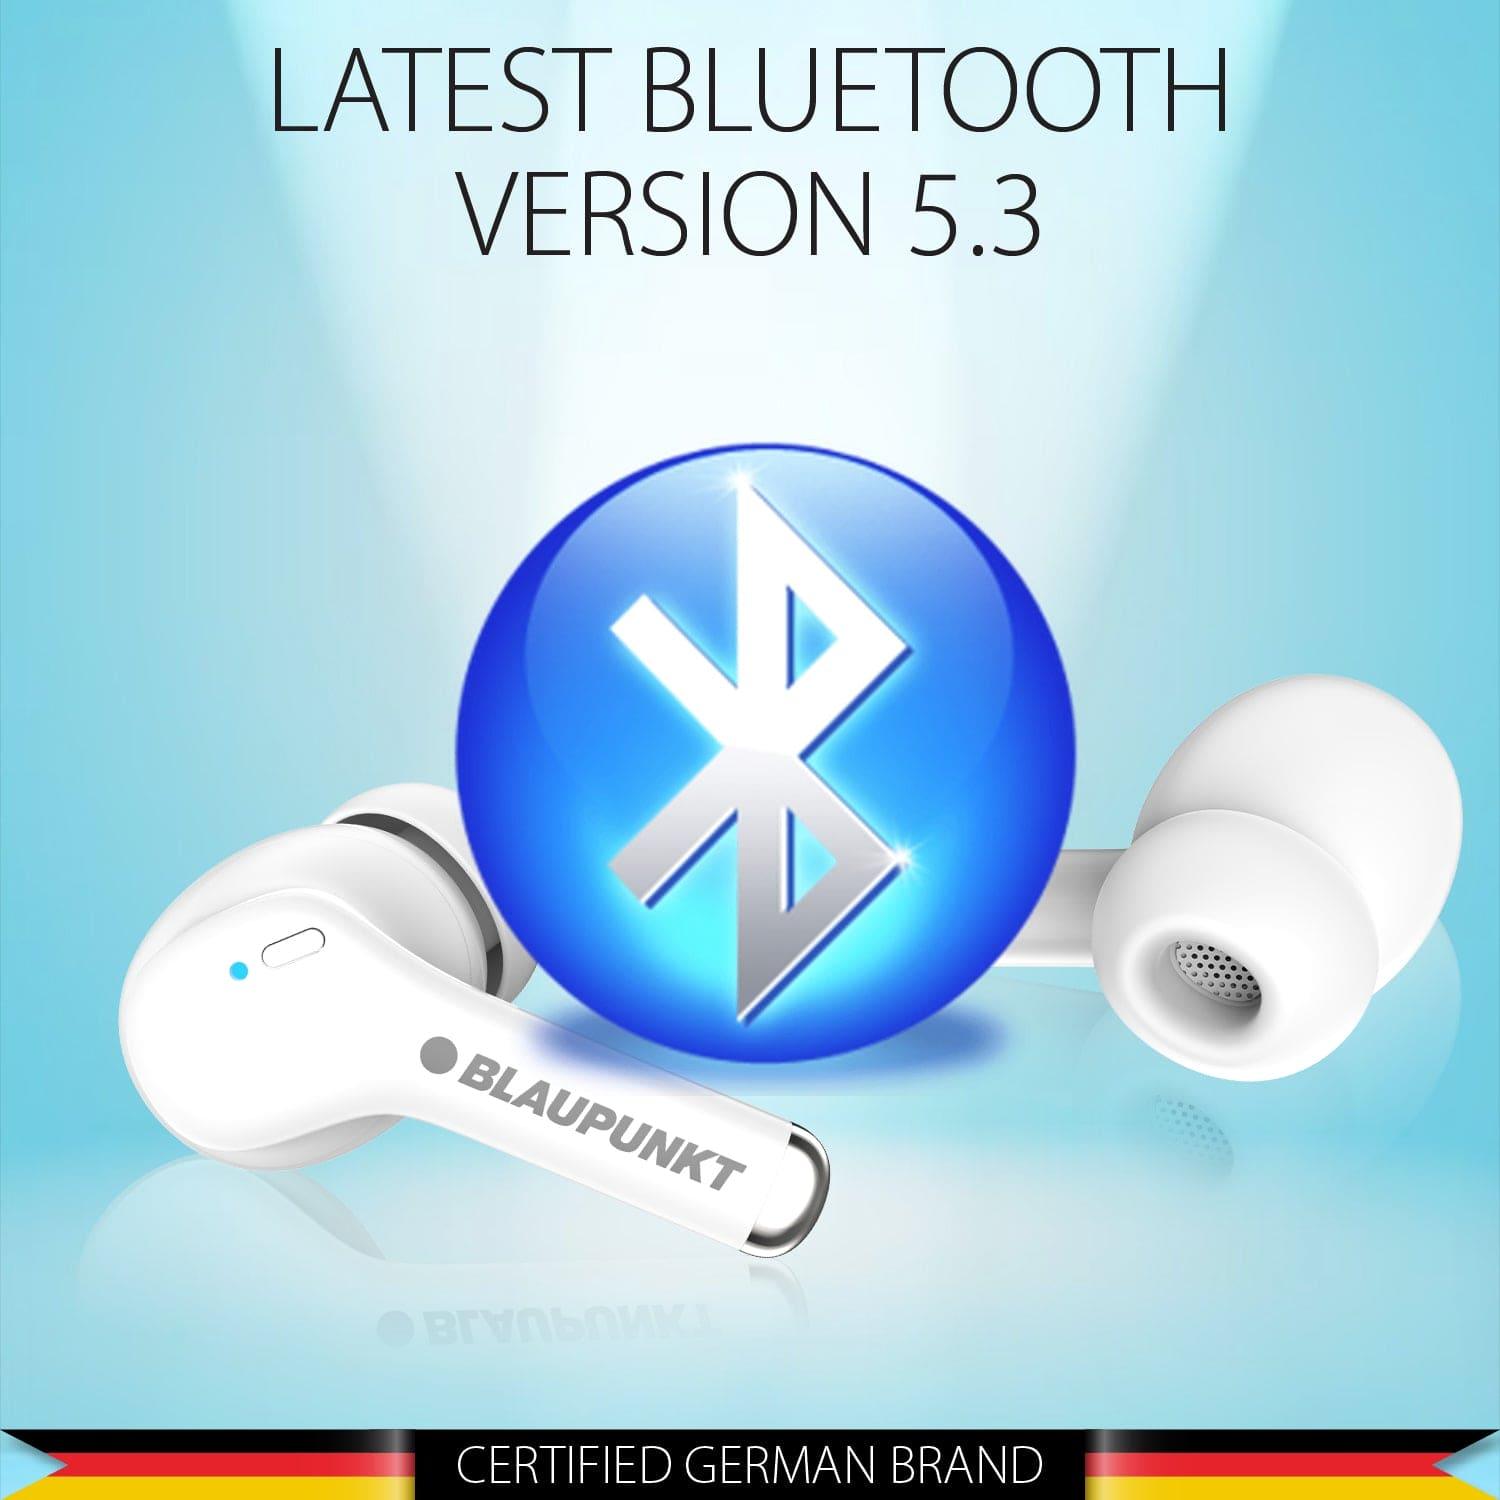 BTW100 Xtreme True Wireless Bluetooth Earbuds (WH) - Blaupunkt India